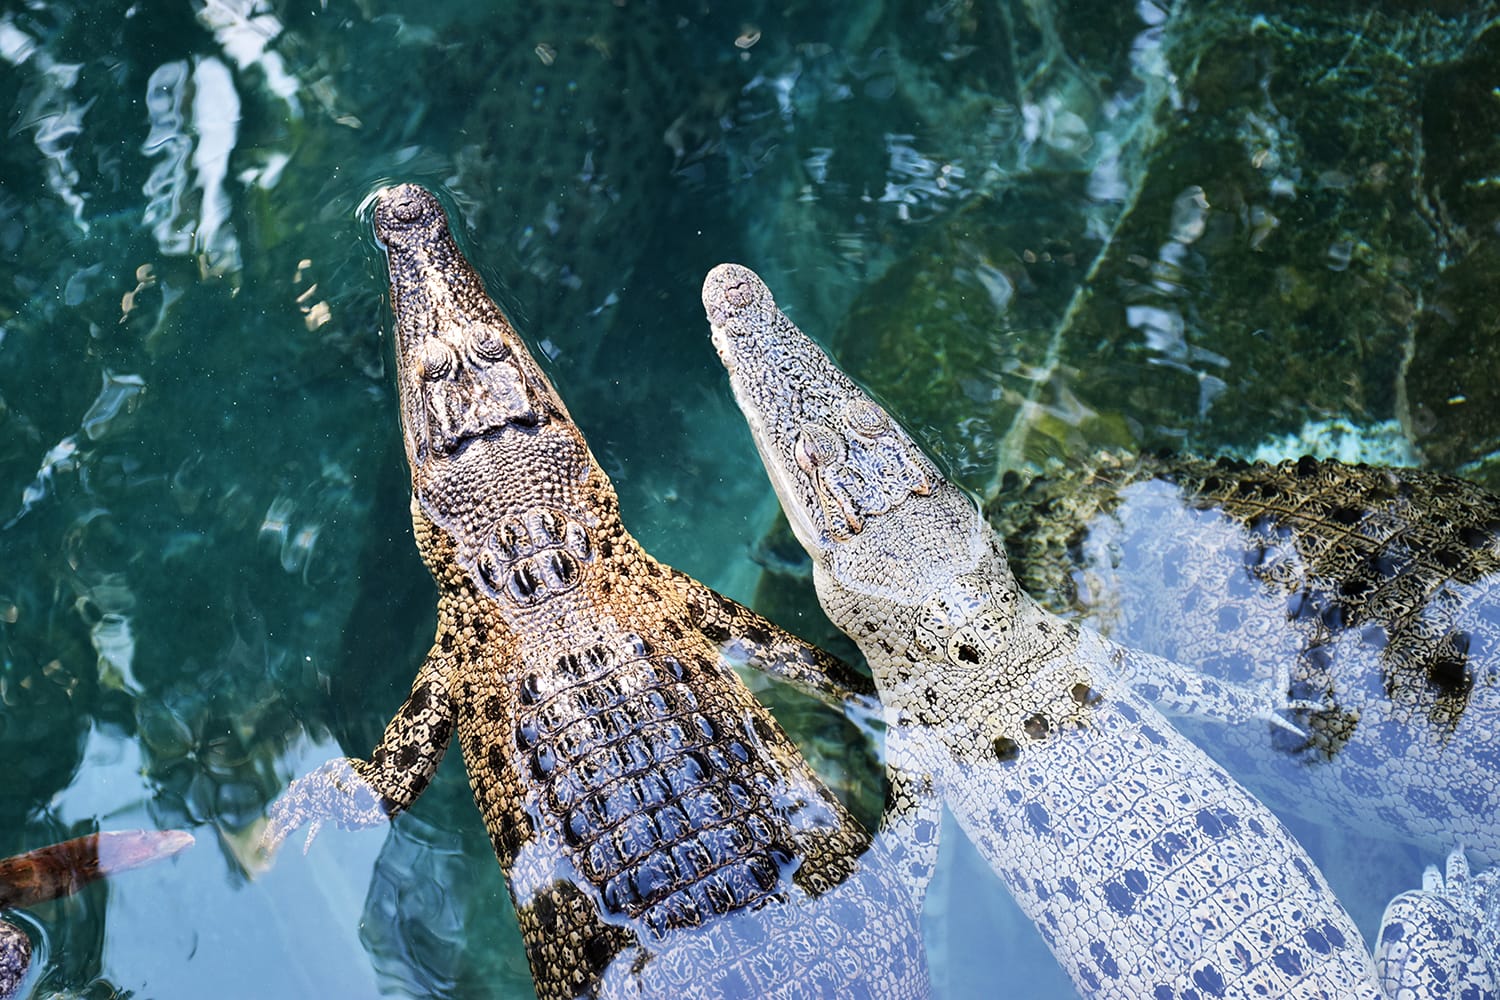 Juvenile australian crocodiles in Darwin, Australia.